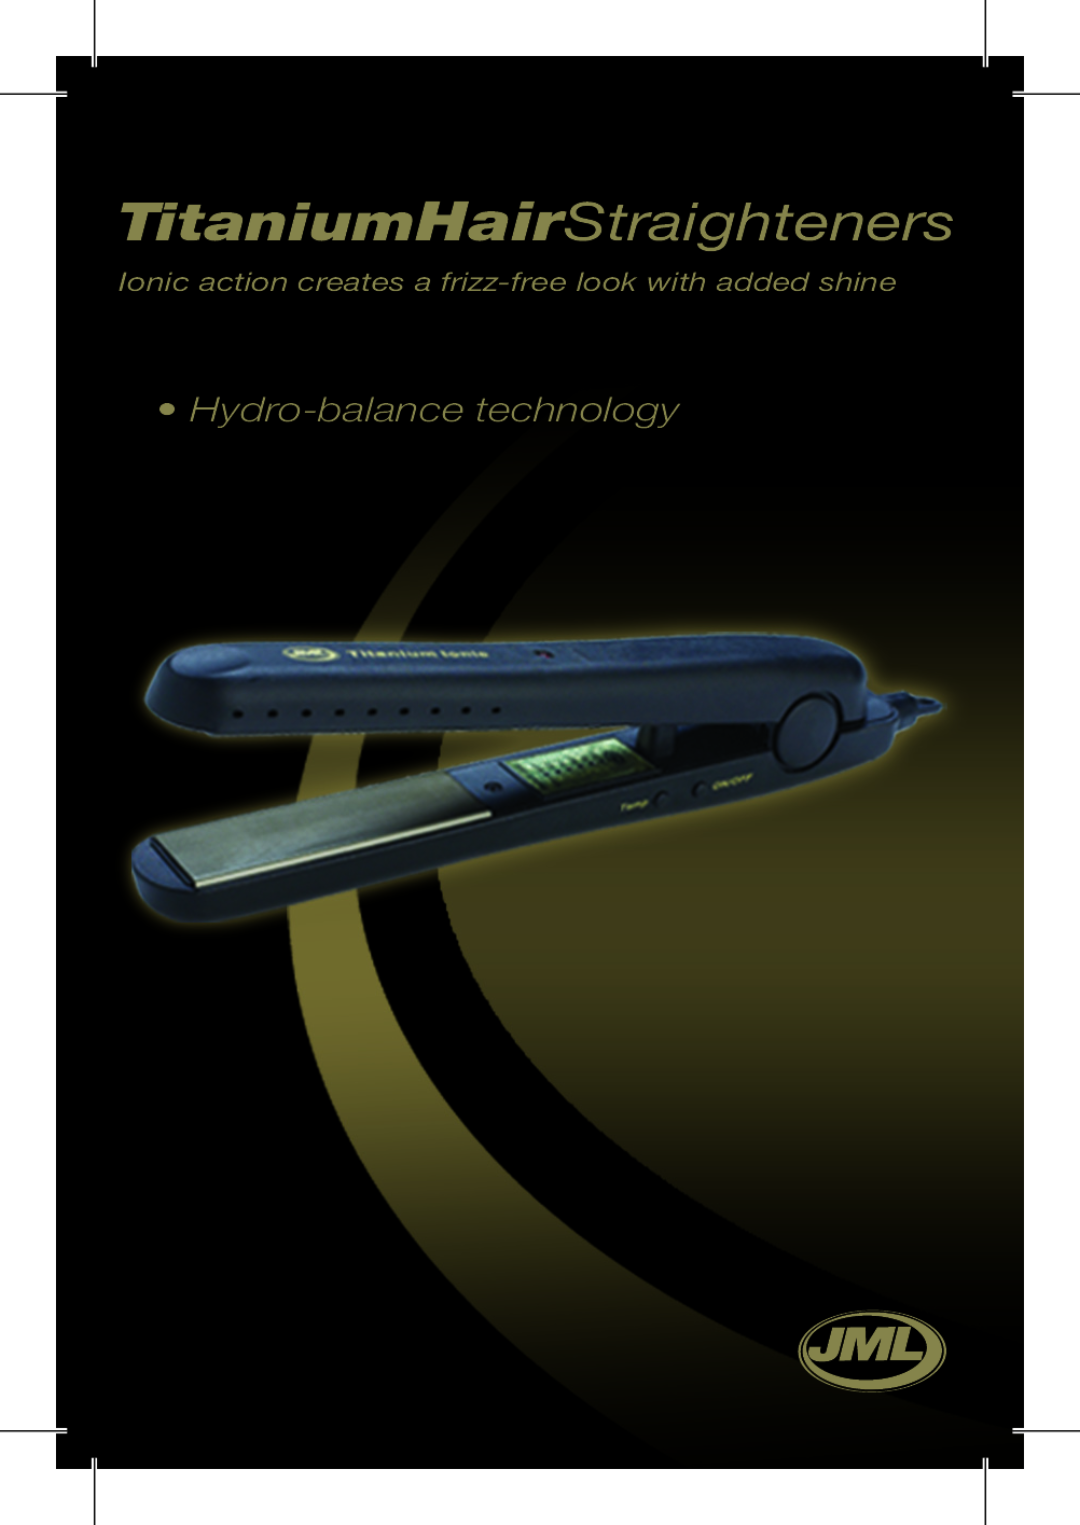 John Mills John Mills Titanium Hair Straightener manual TitaniumHairStraighteners, Hydro-balance technology 